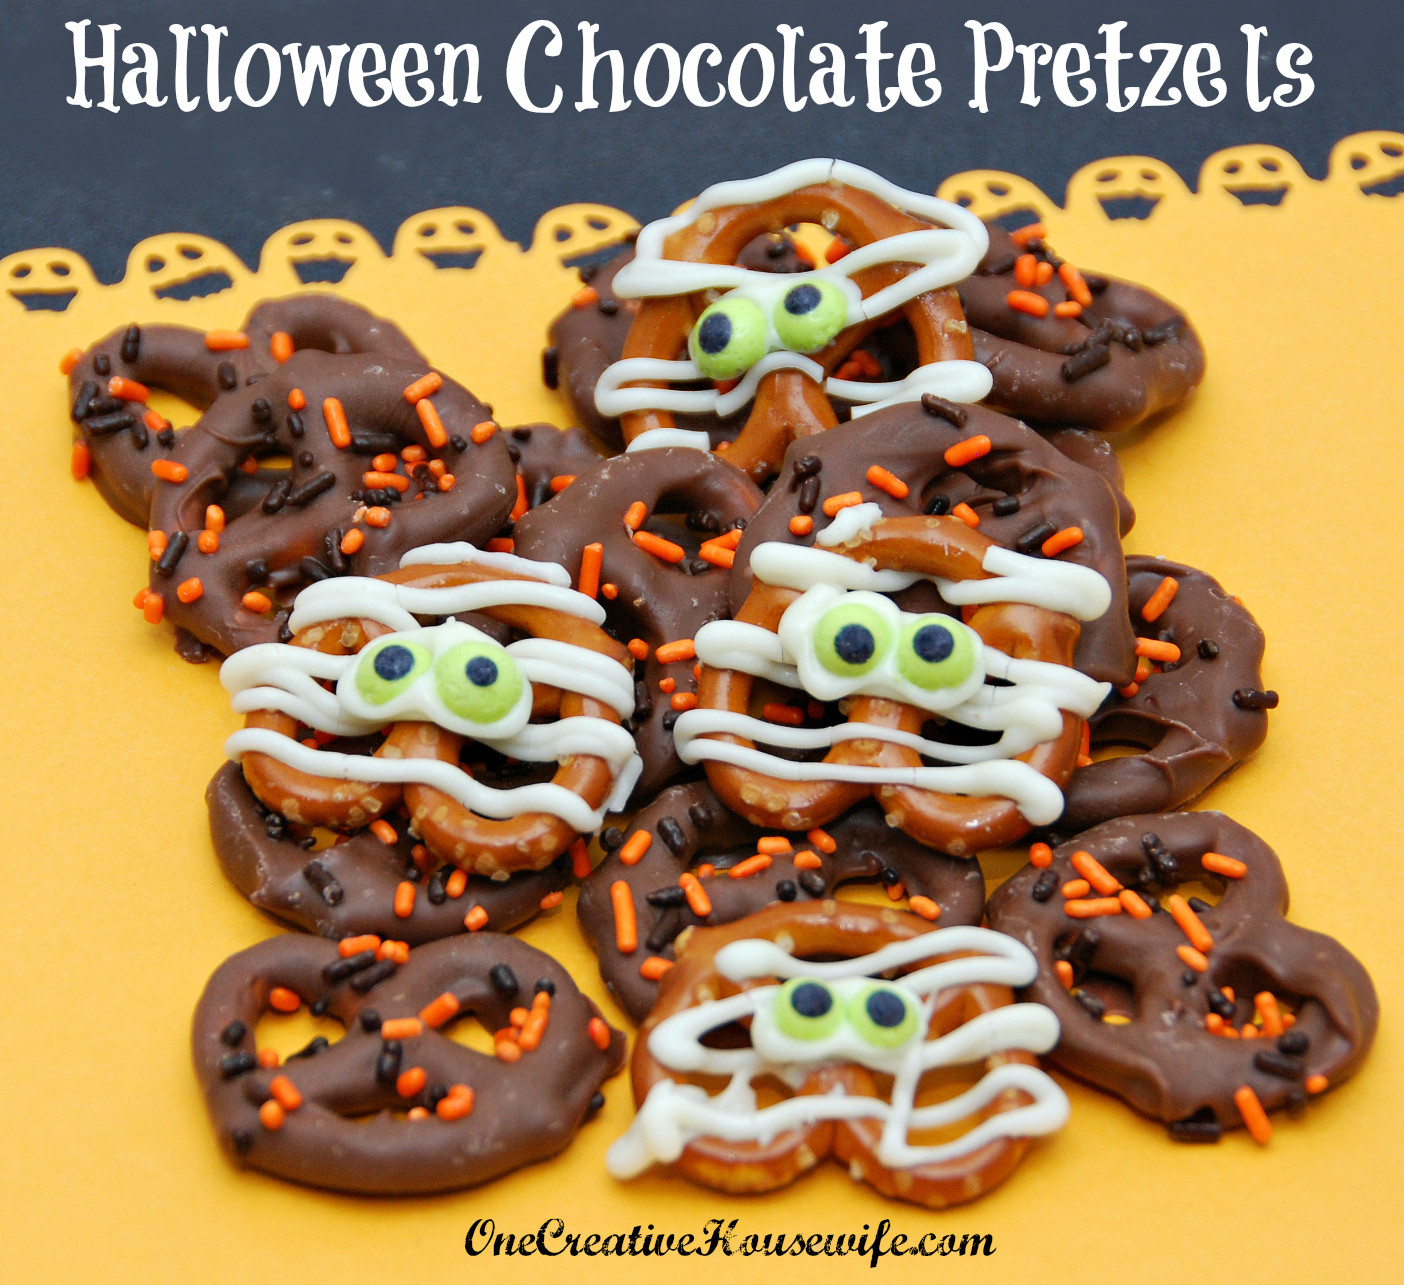 Chocolate Covered Pretzels Halloween
 e Creative Housewife Halloween Chocolate Covered Pretzels